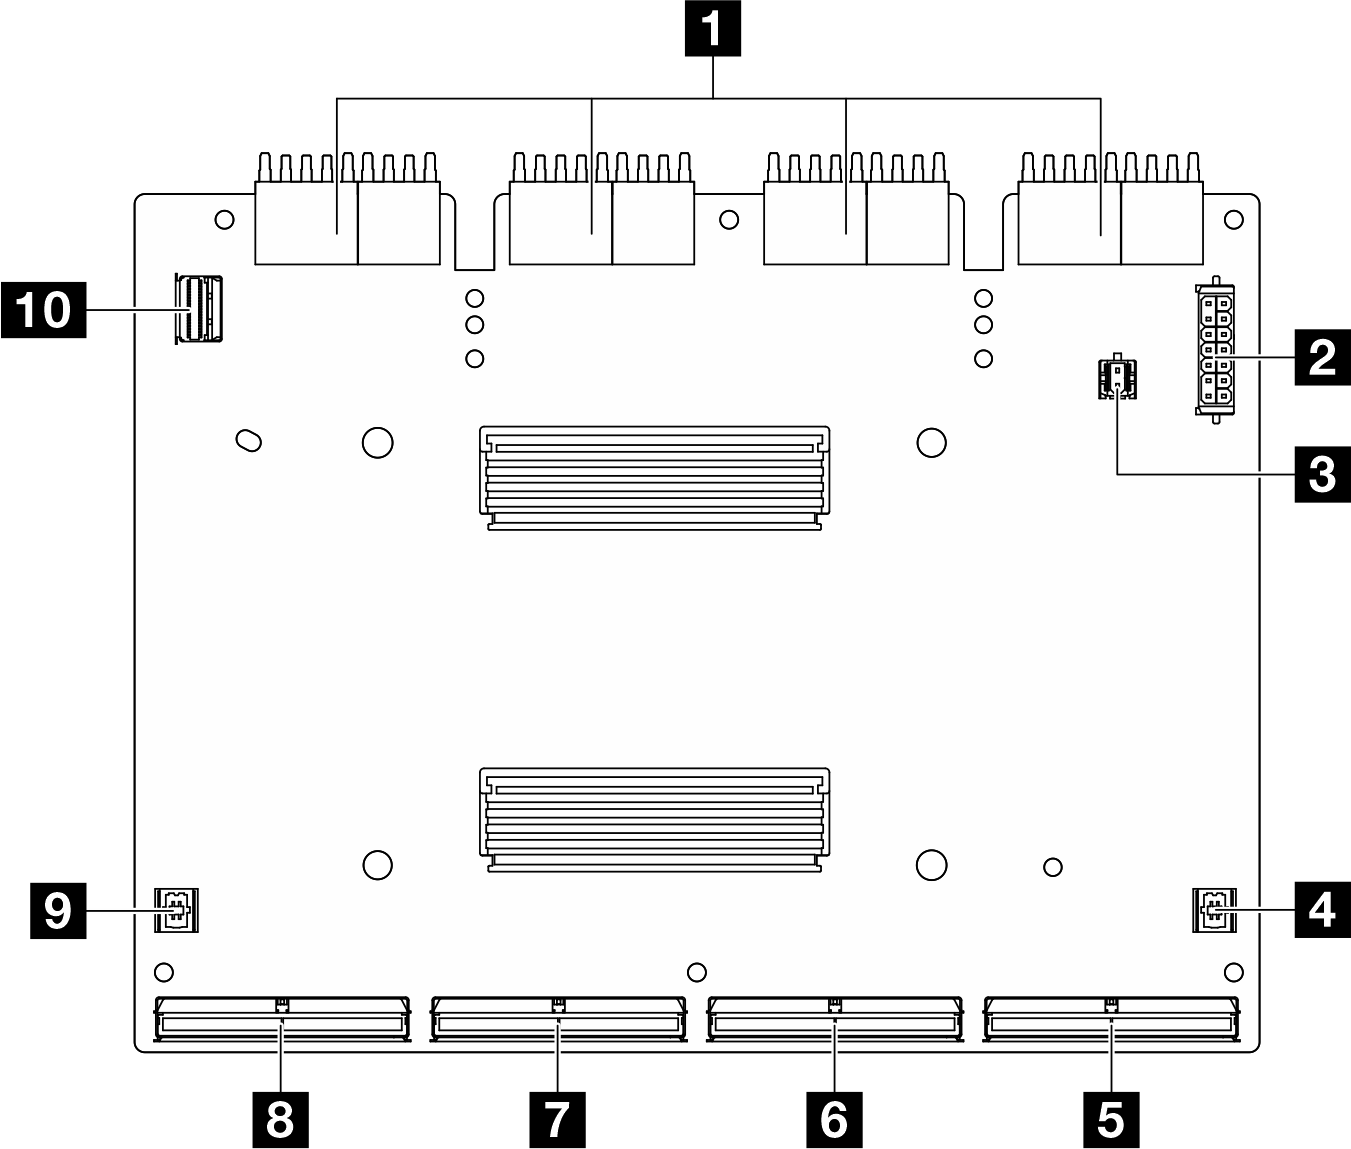 CX-7 支架板 connectors